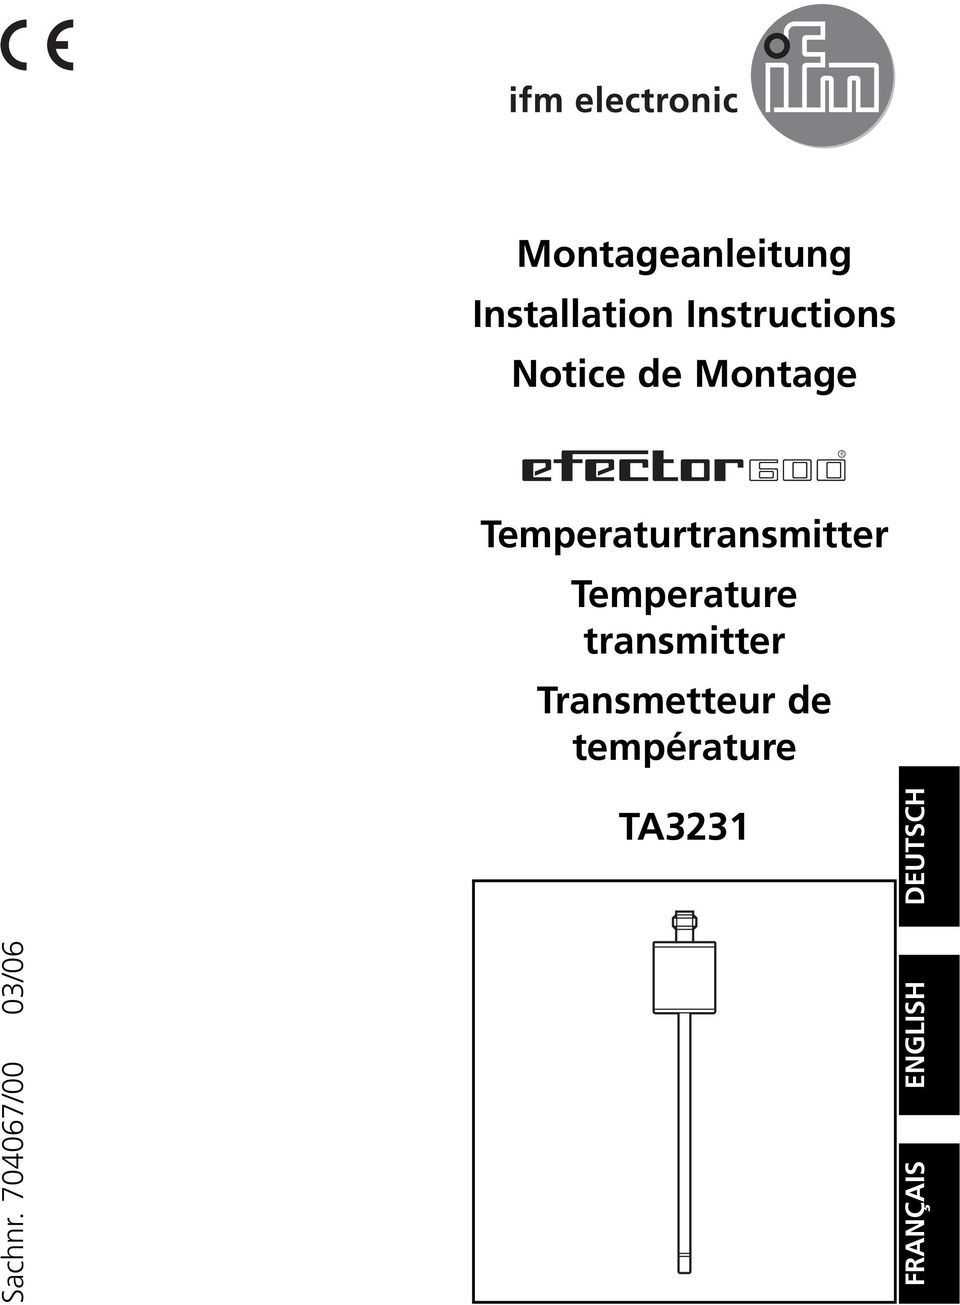 Temperature transmitter Transmetteur de